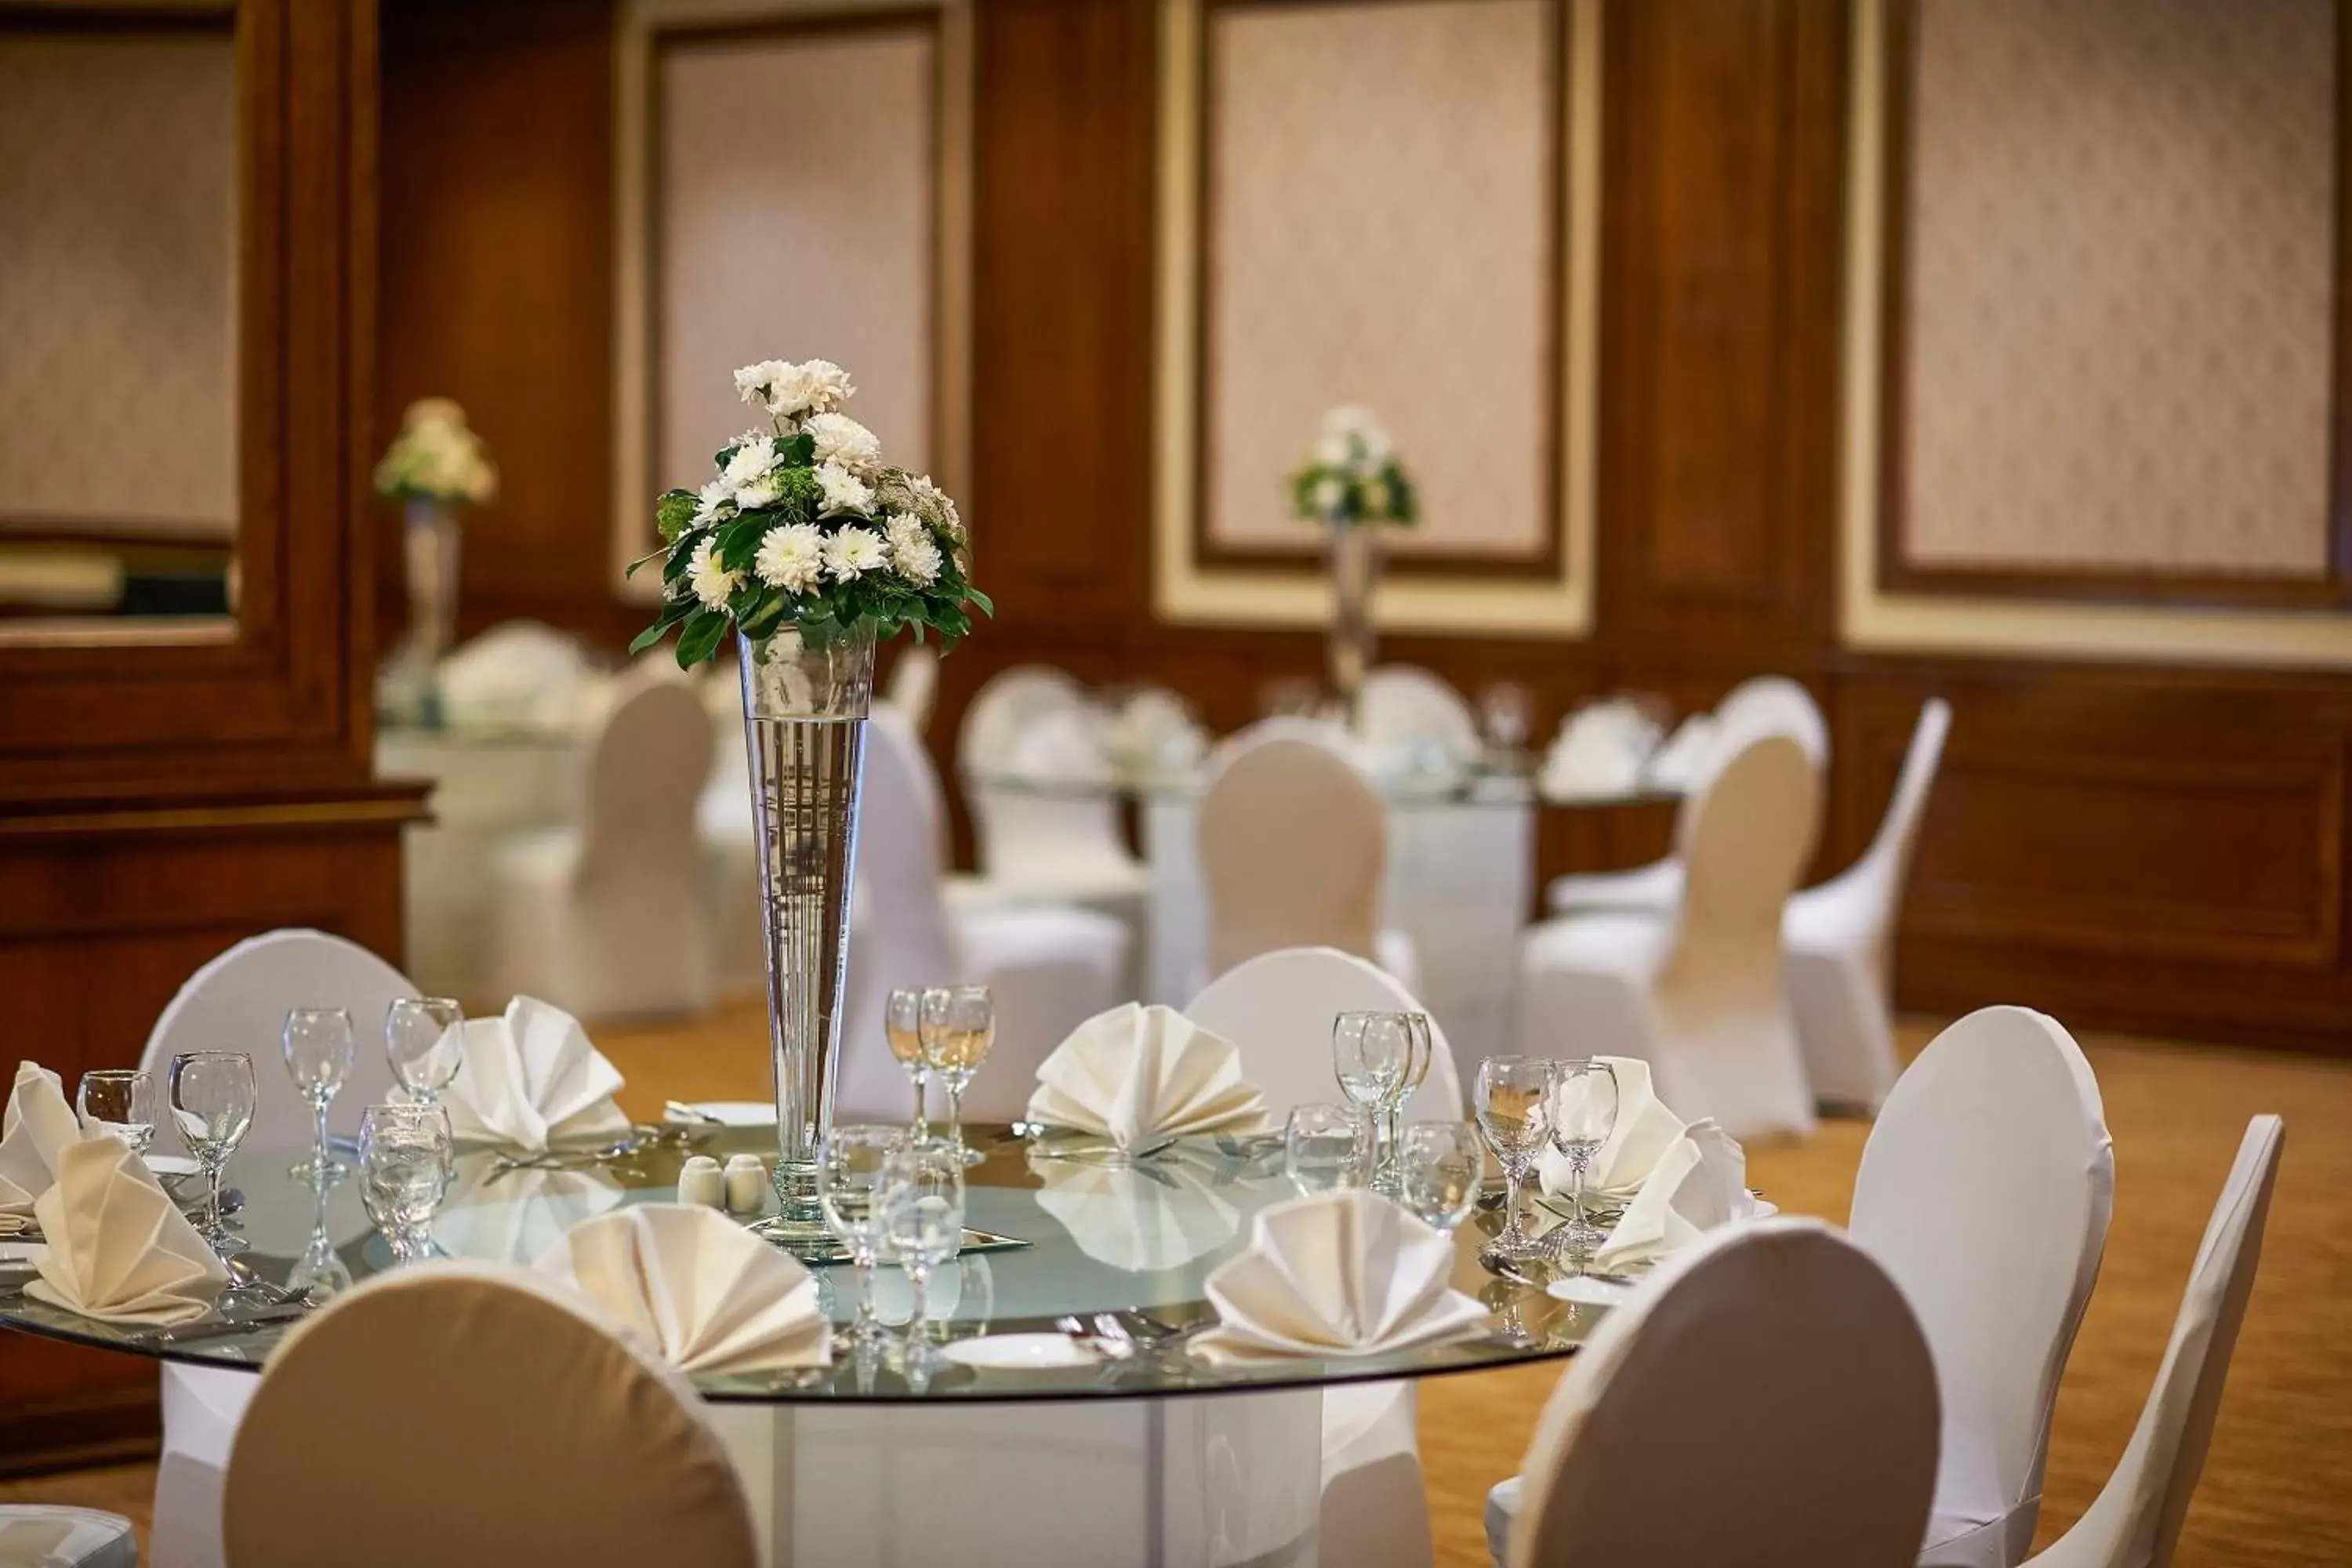 Banquet/Function facilities, Banquet Facilities in Safir Hotel Cairo